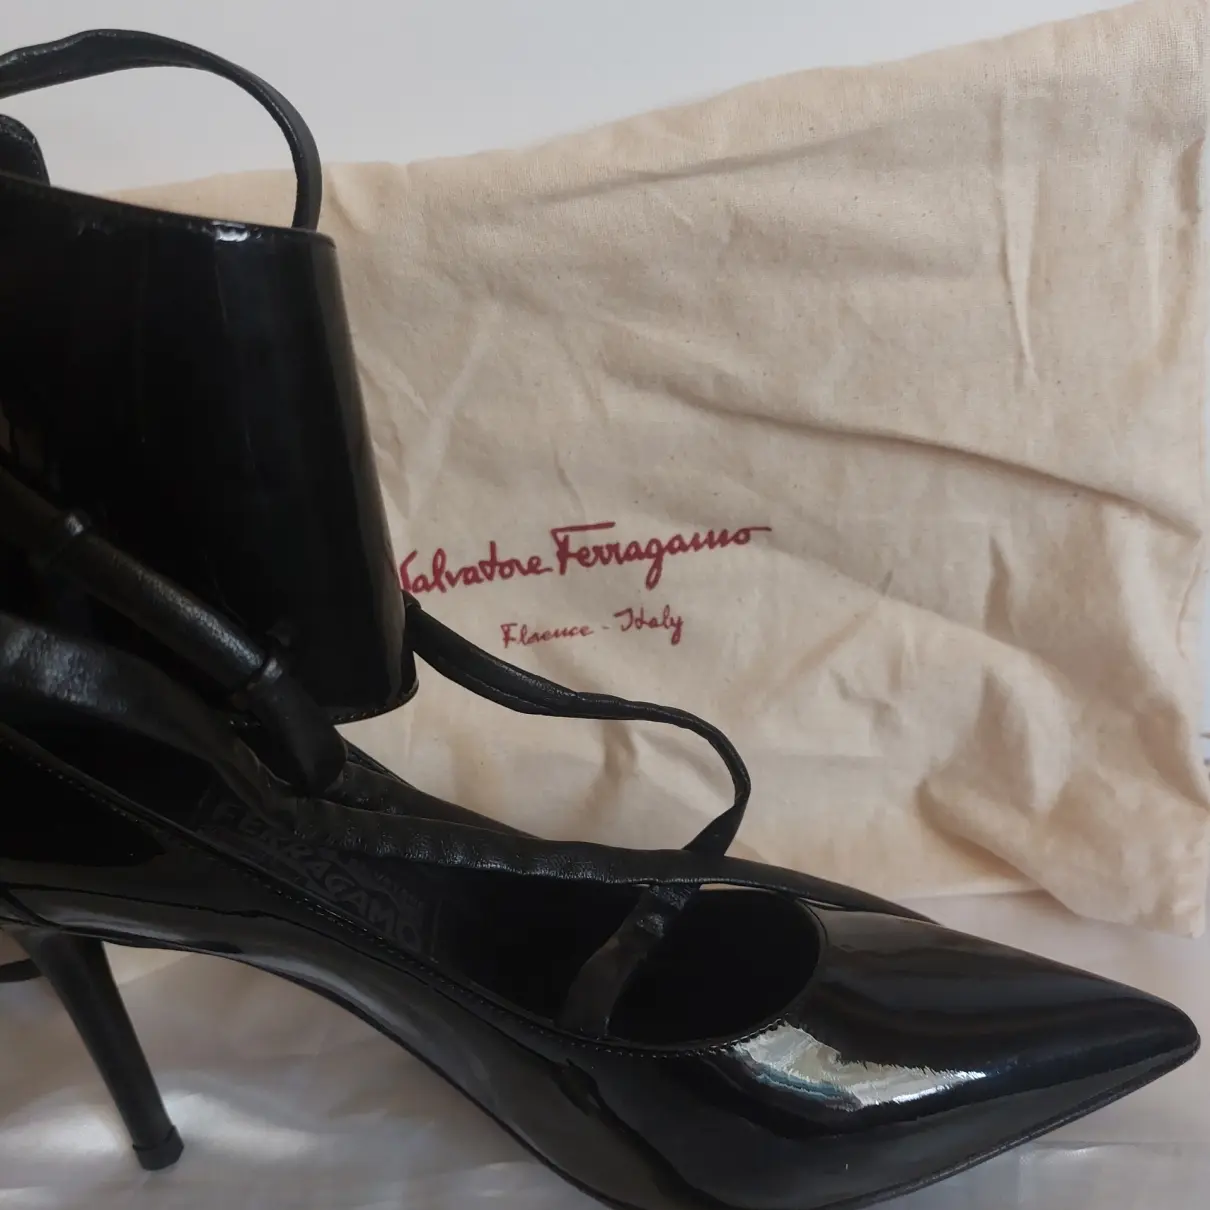 Patent leather heels Salvatore Ferragamo